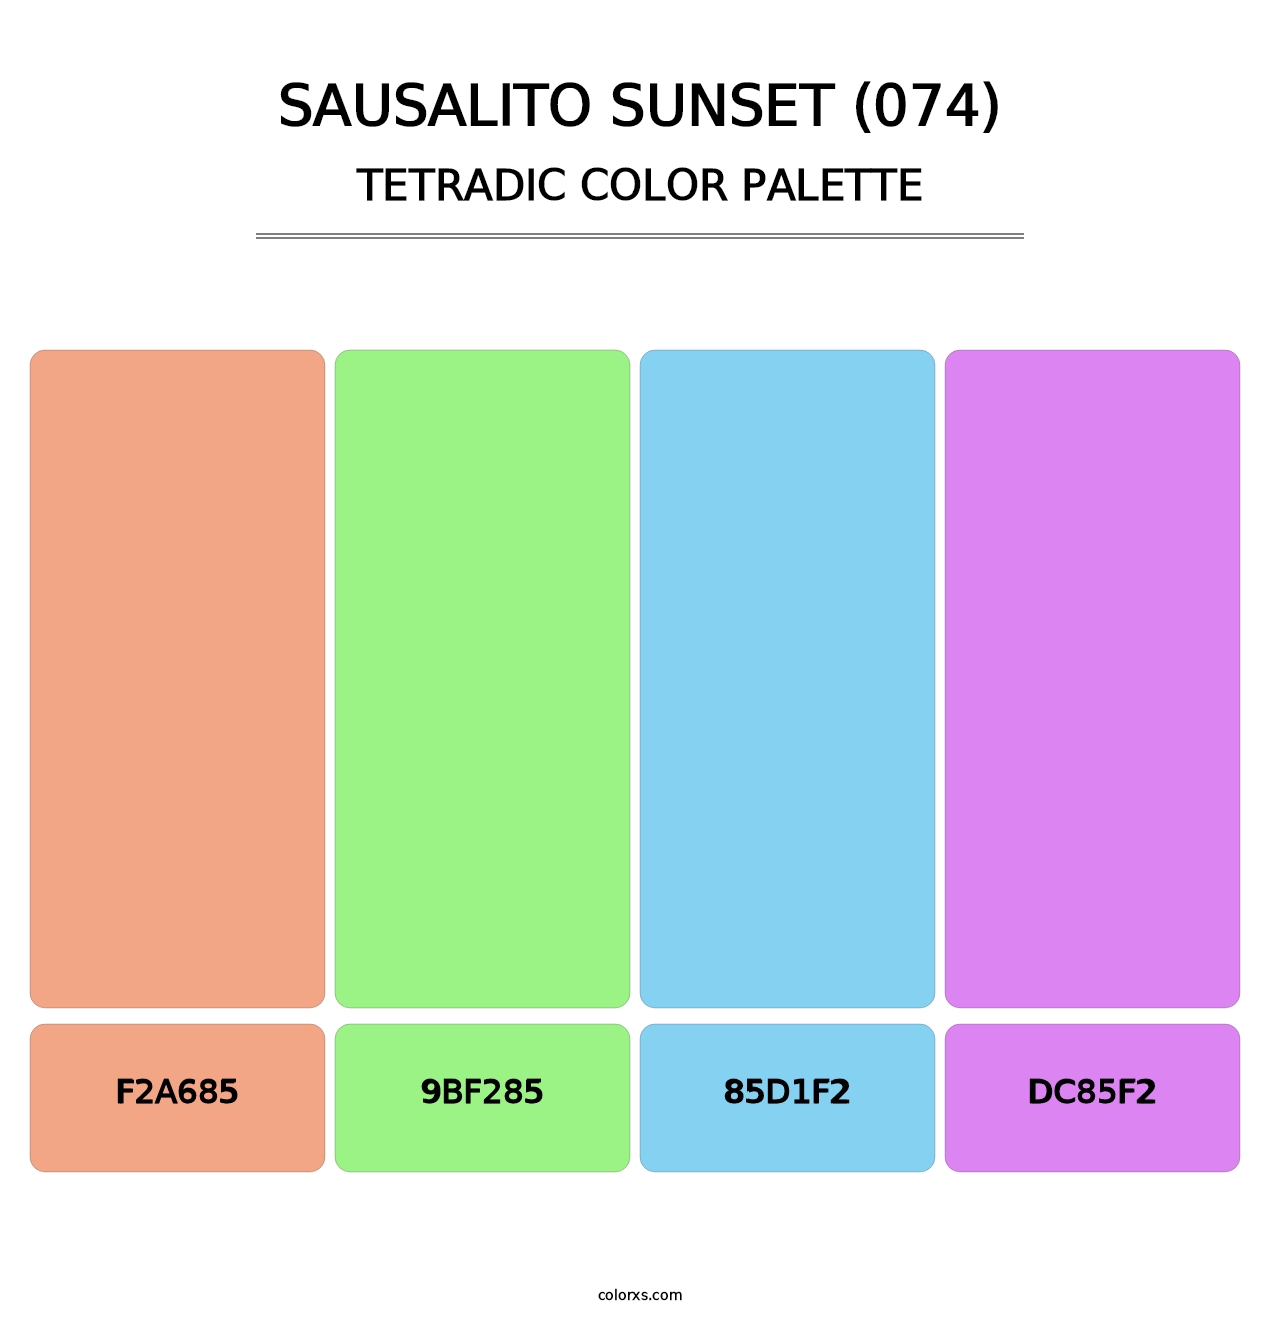 Sausalito Sunset (074) - Tetradic Color Palette